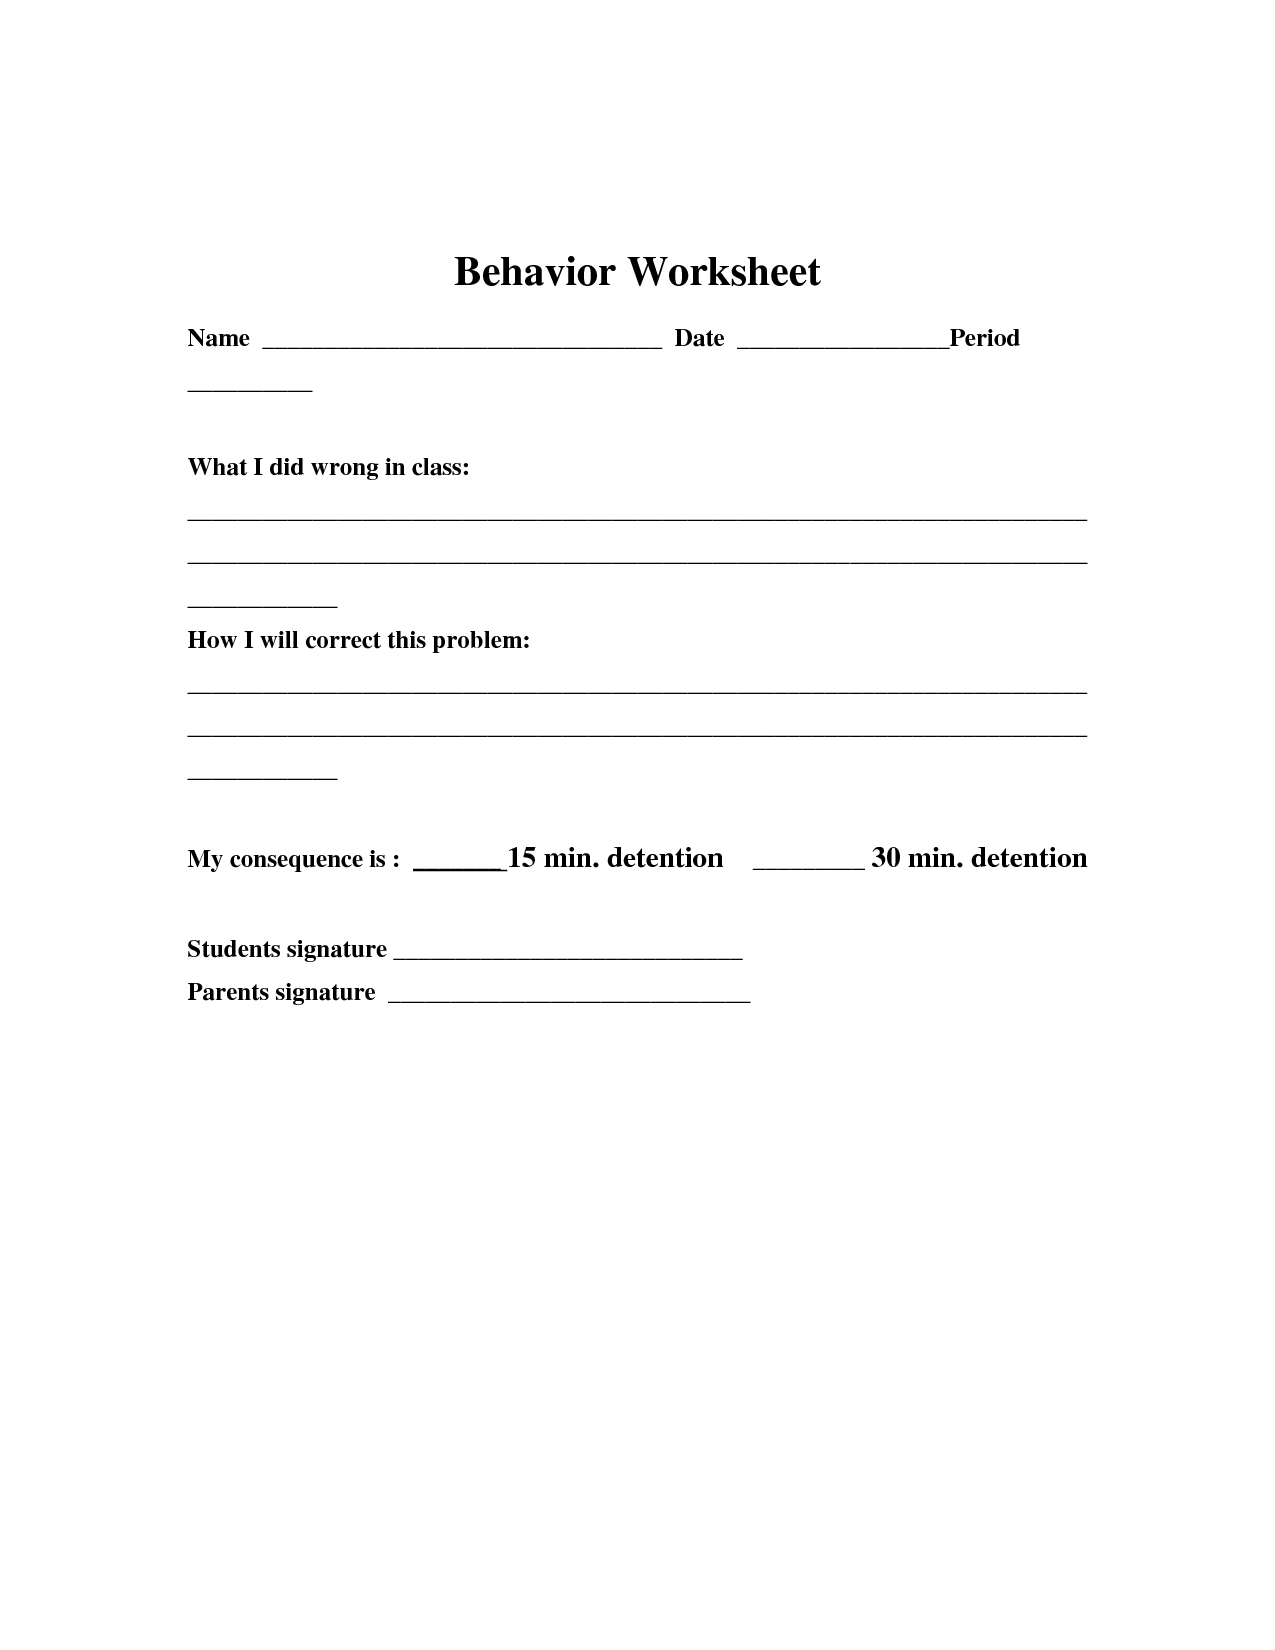 Correcting Behavior Worksheets Image